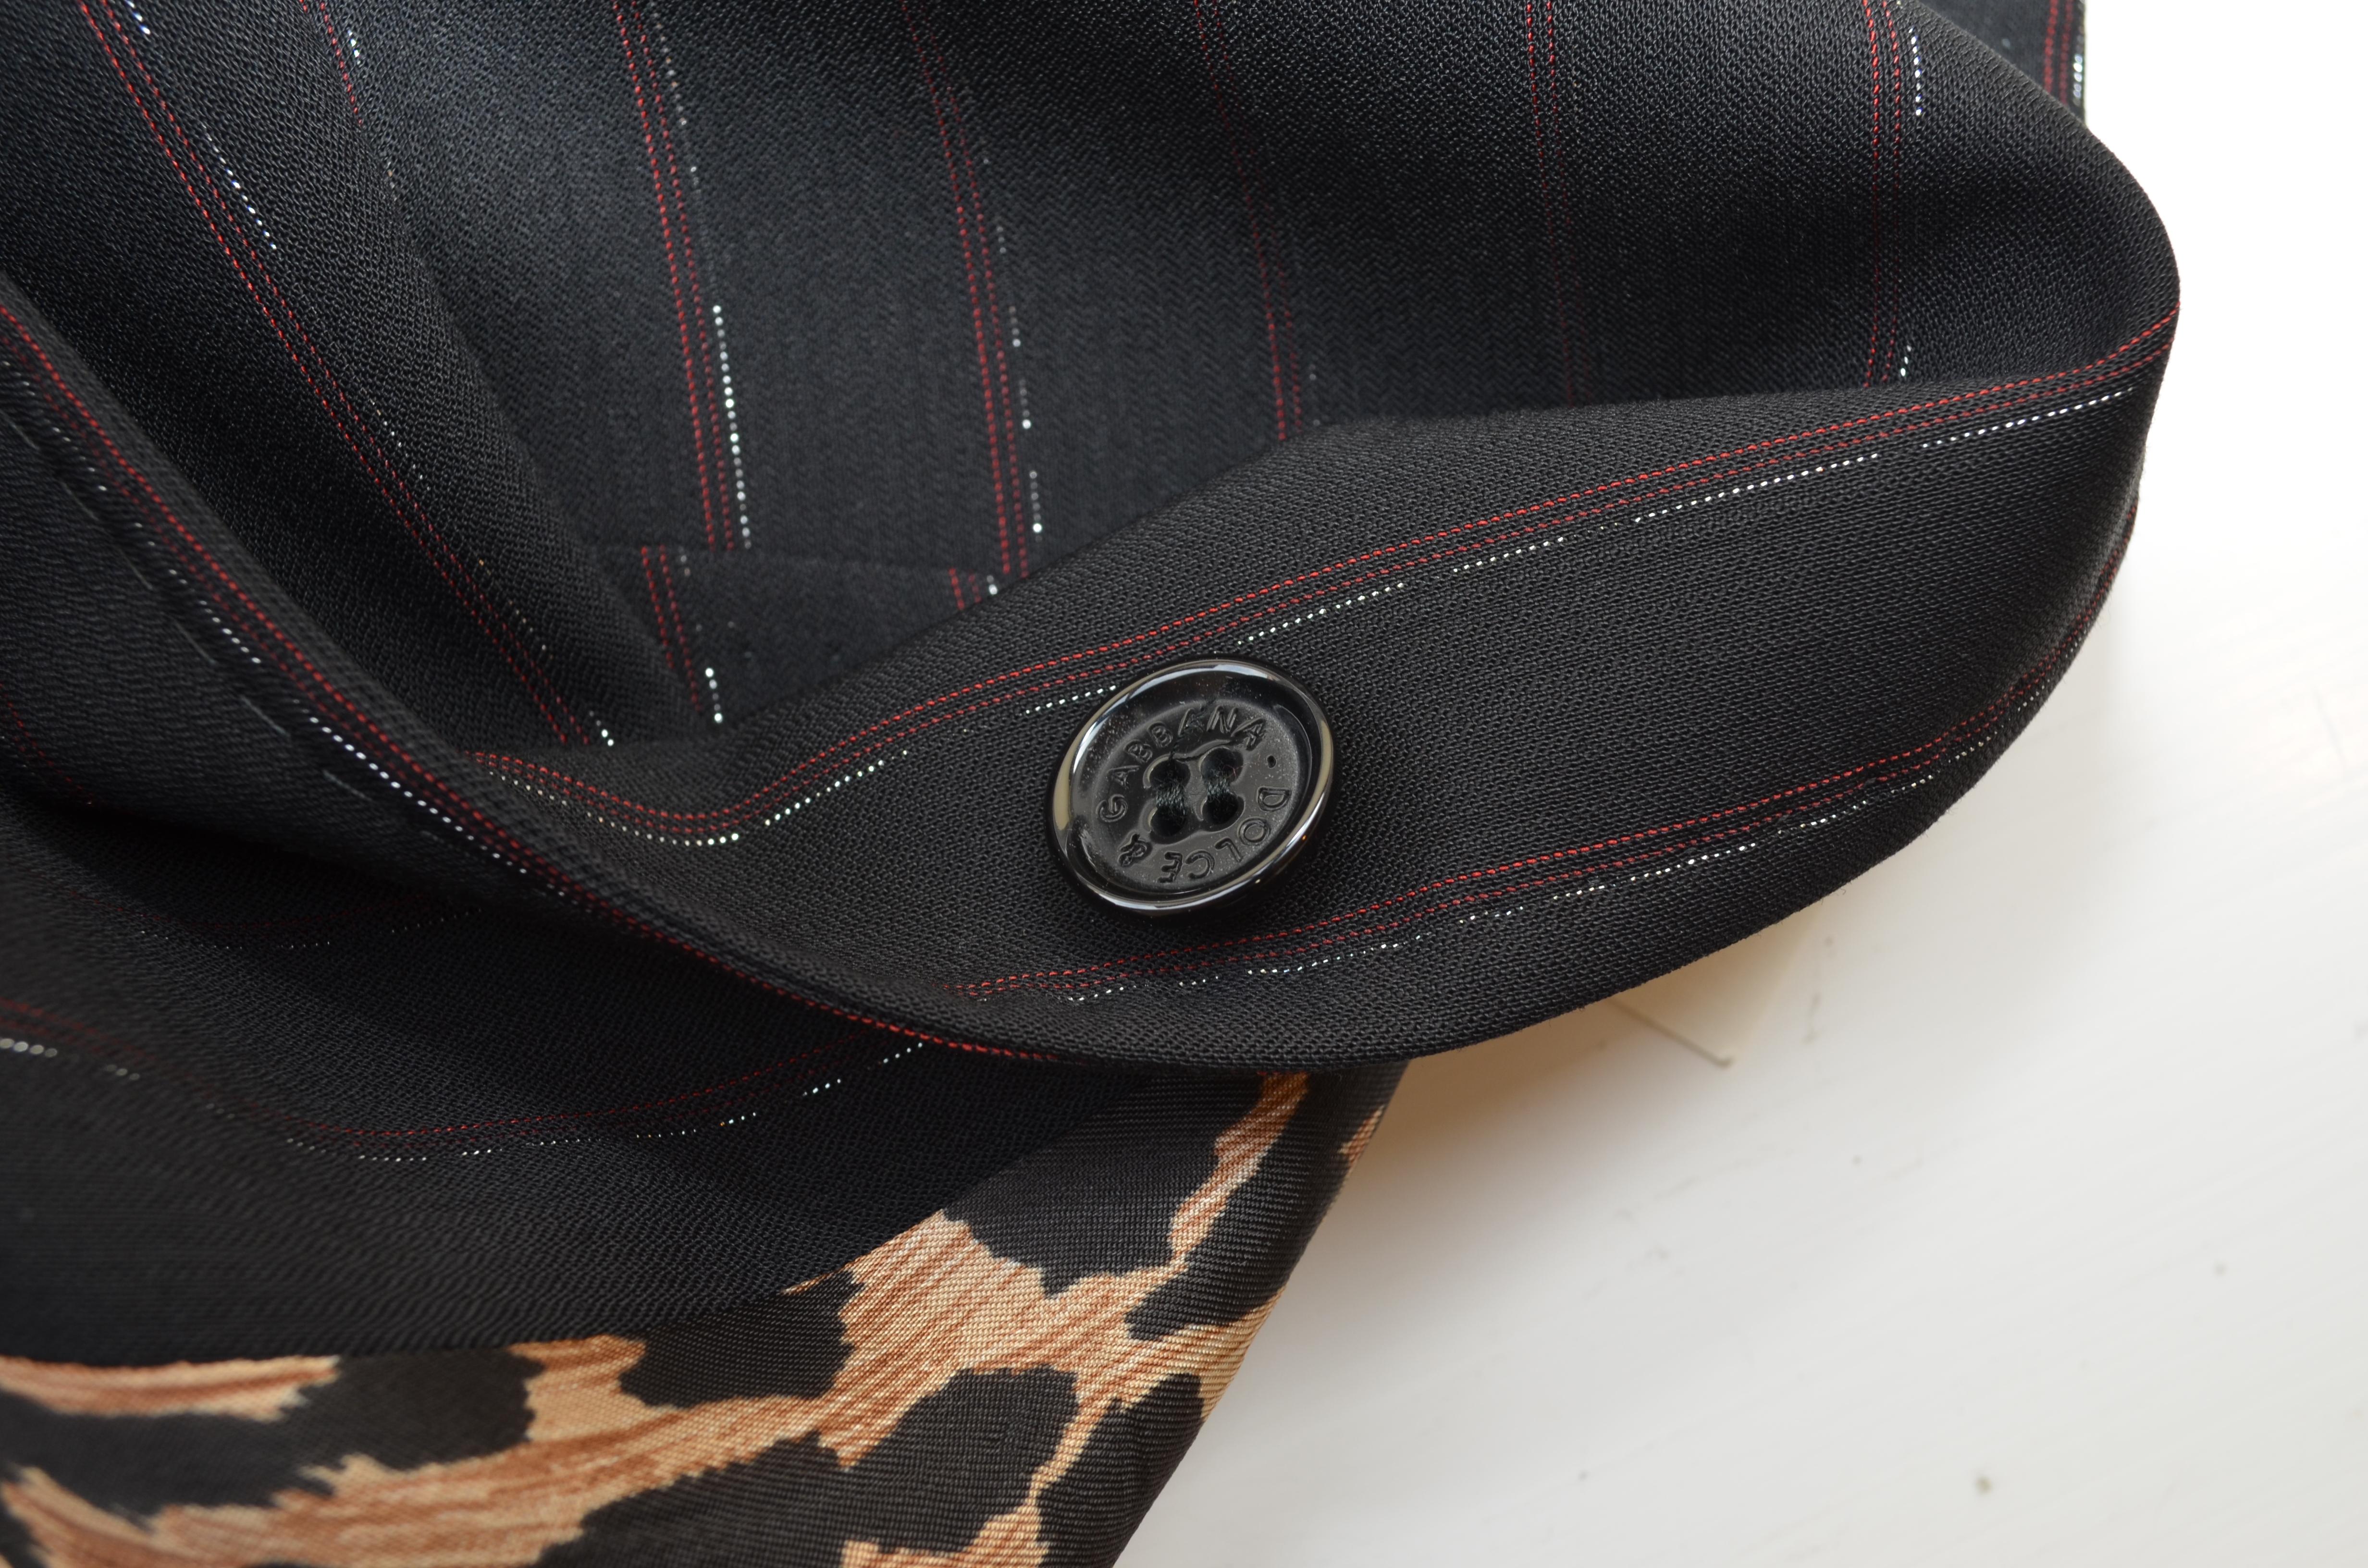 Dolce & Gabbana Black Pinstriped Jacket and Pants Suit Set 4